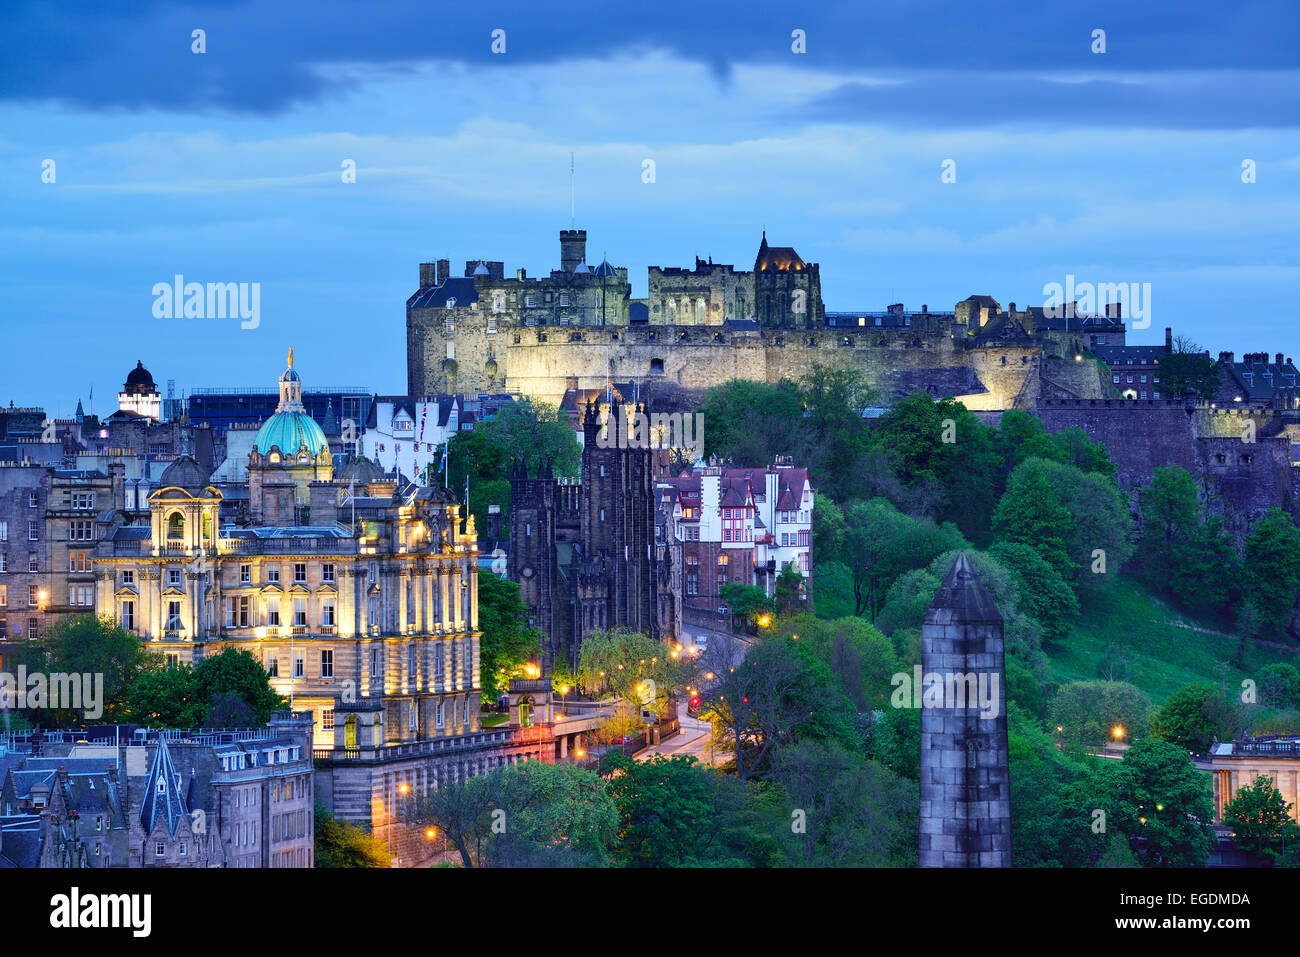 View to city of Edinburgh, illuminated at night, with Edinburgh castle, Calton Hill, UNESCO World Heritage Site Edinburgh, Edinburgh, Scotland, Great Britain, United Kingdom Stock Photo